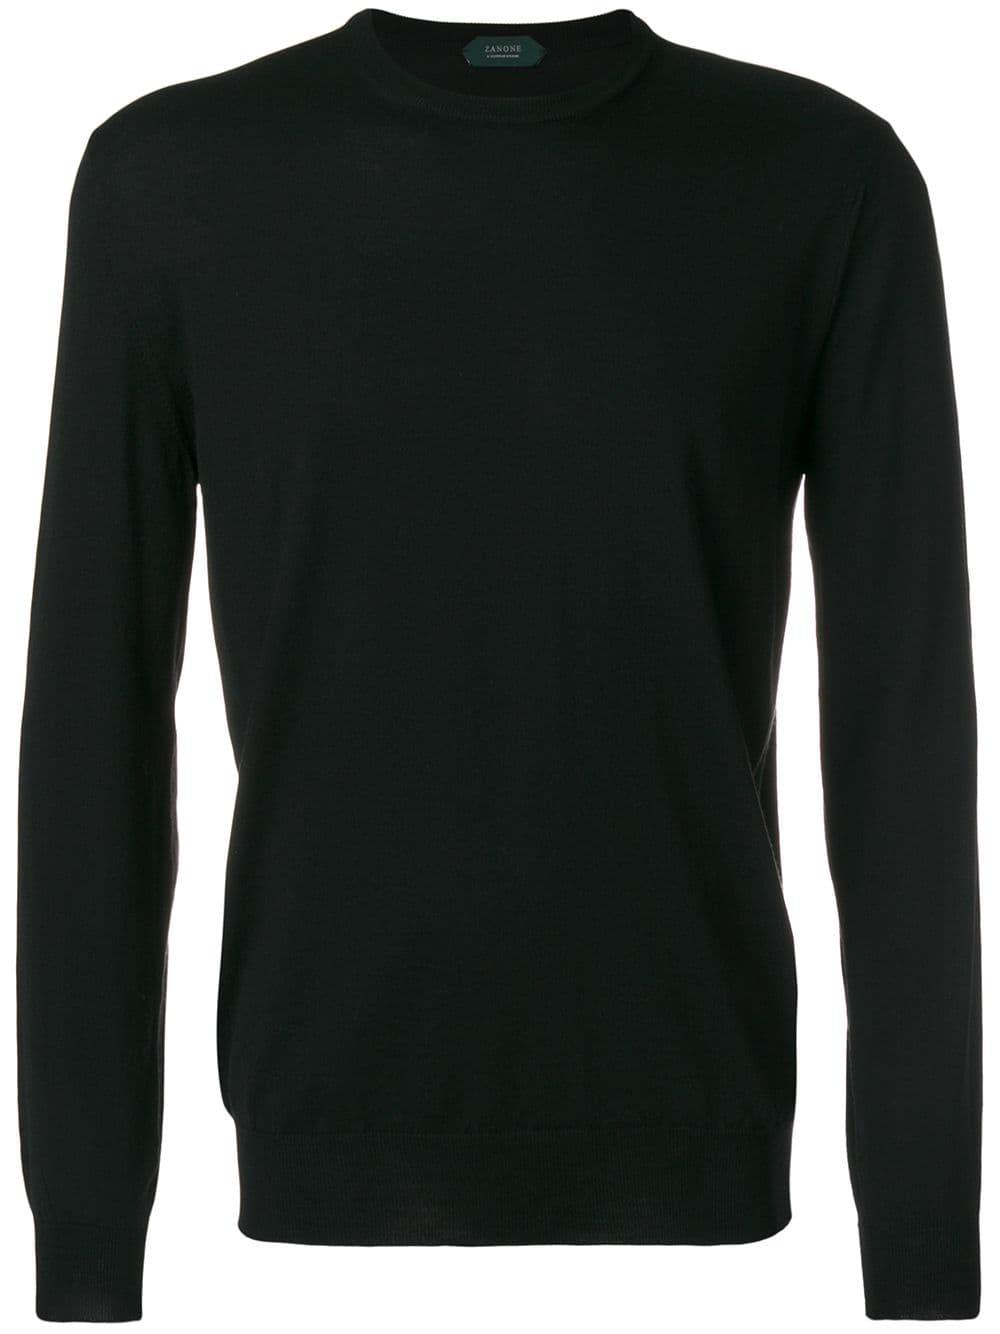 Zanone Wool Crew Neck Sweater in Black for Men - Lyst